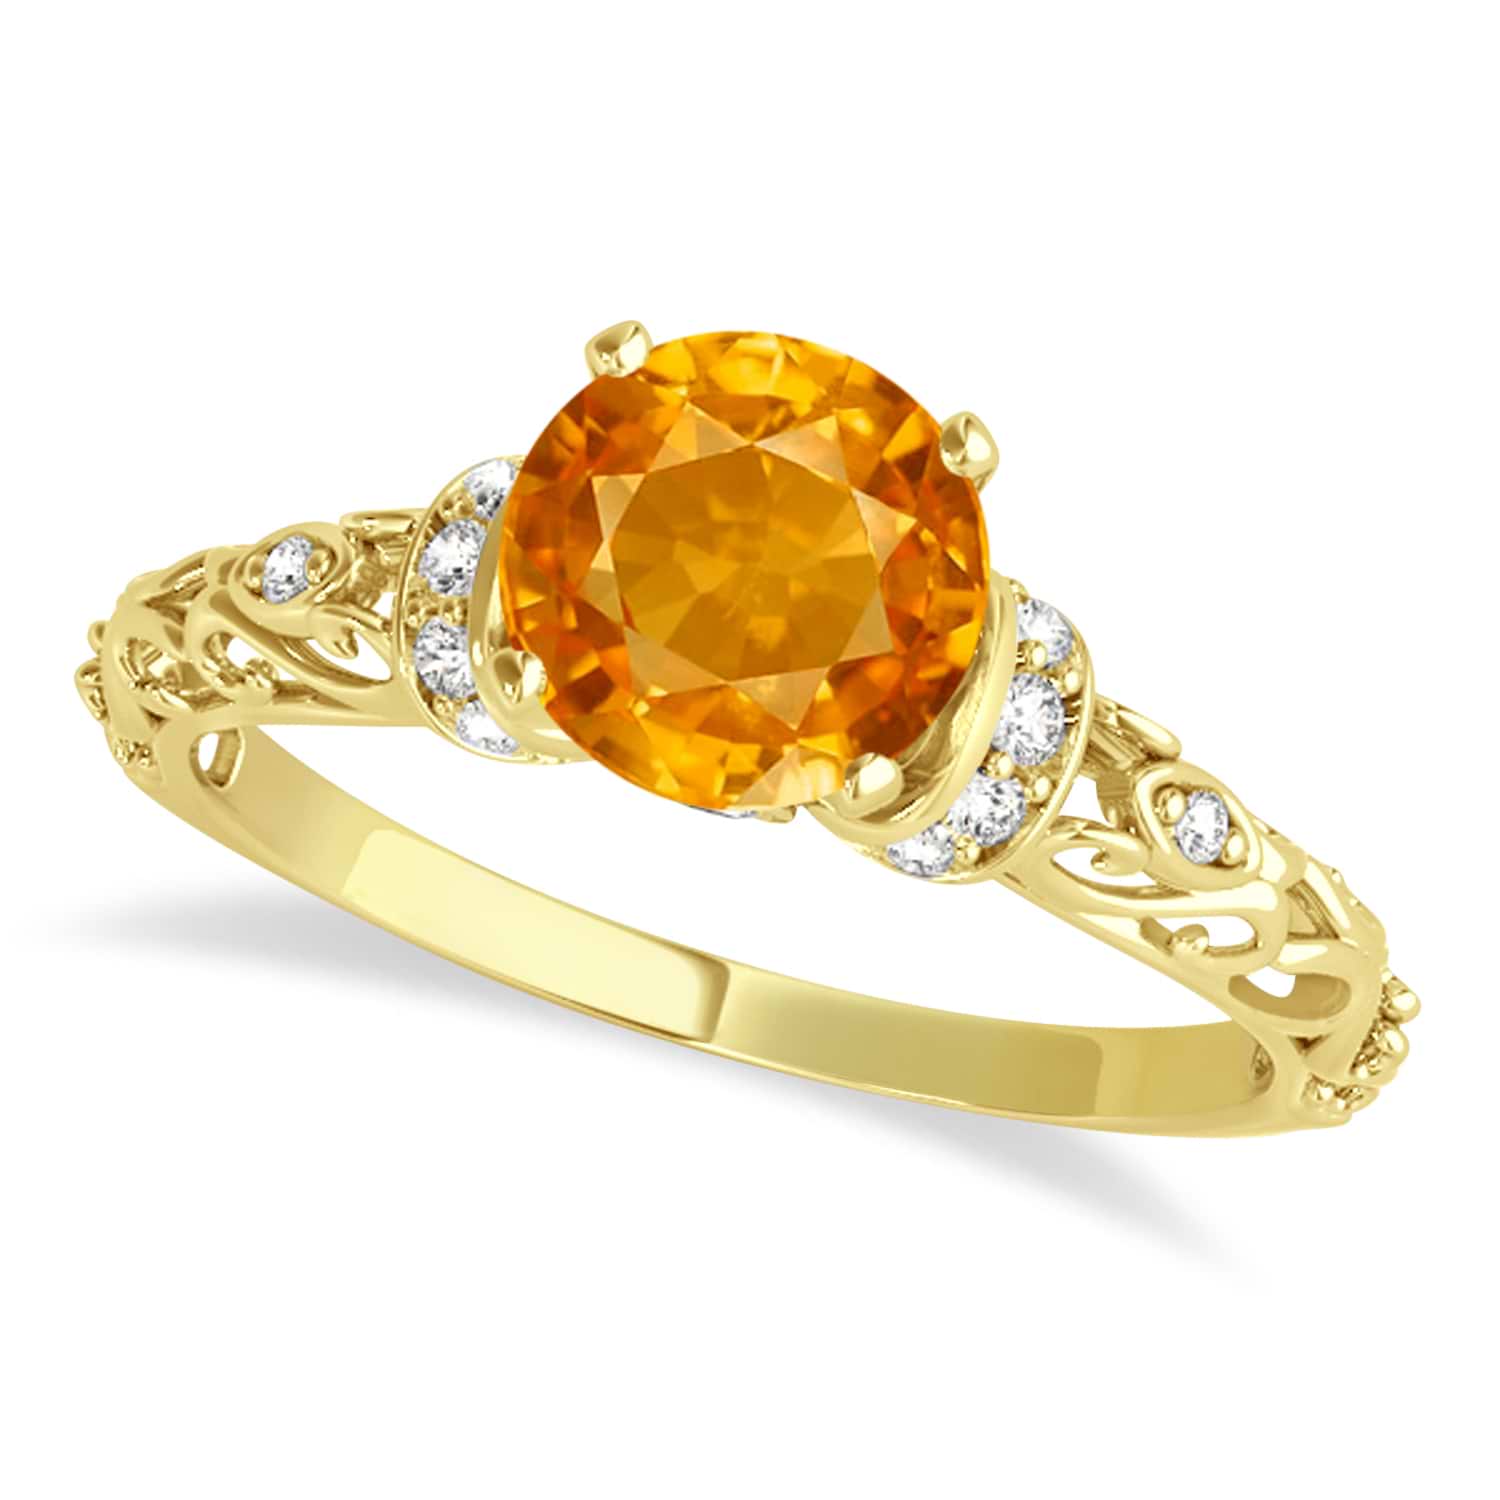 Citrine & Diamond Antique Style Engagement Ring 14k Yellow Gold 0.87ct